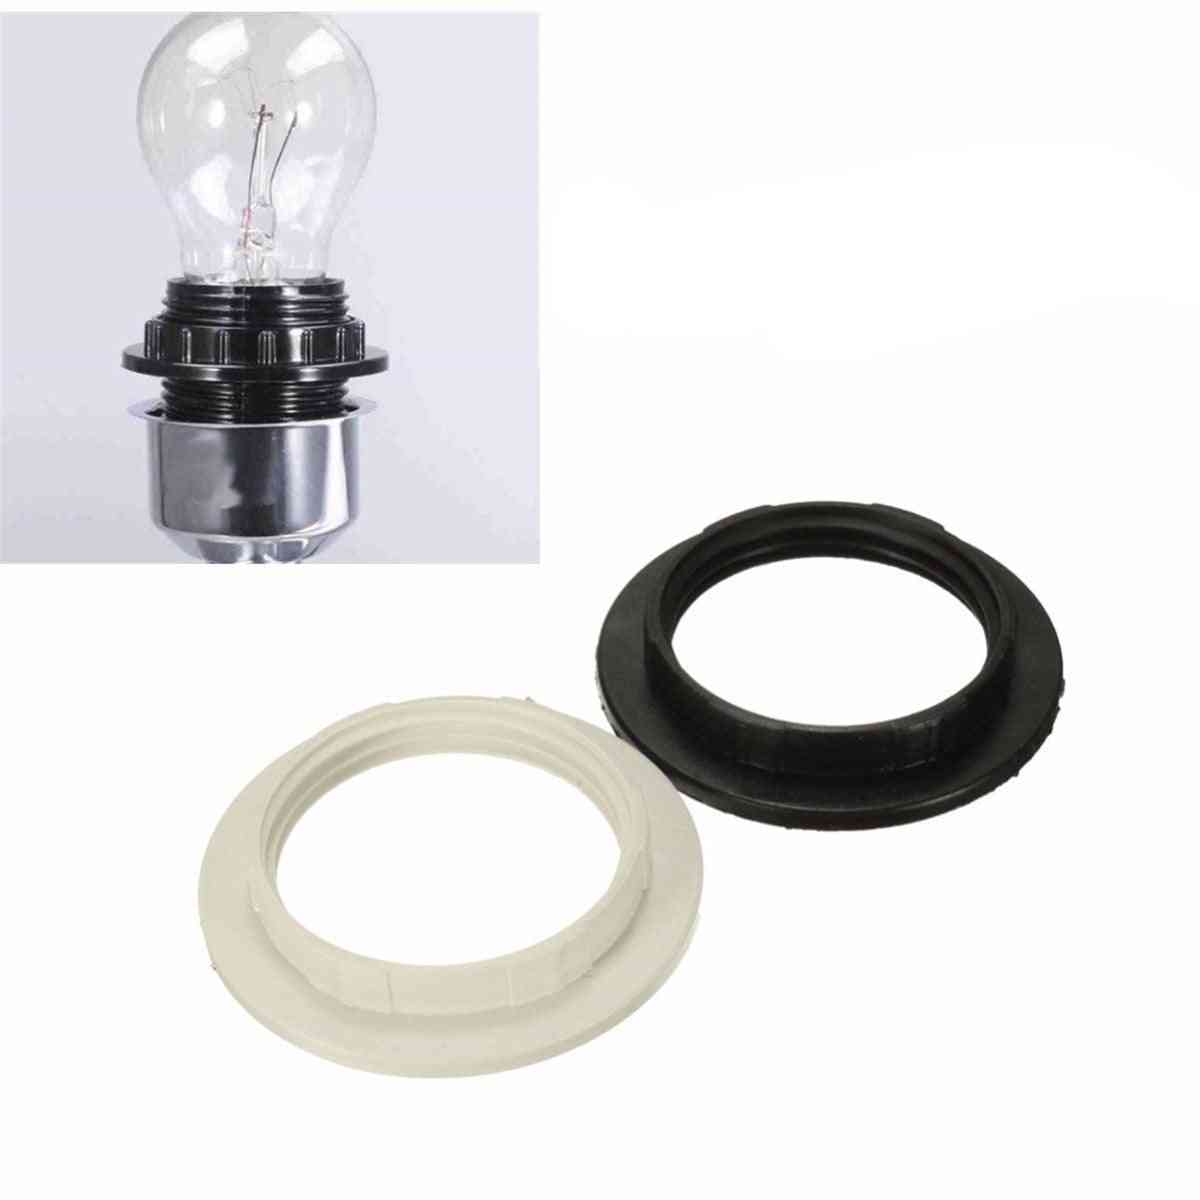 E27 Lampshade Ring - Light Shades Collar Adaptor Bulb Holder Lamp